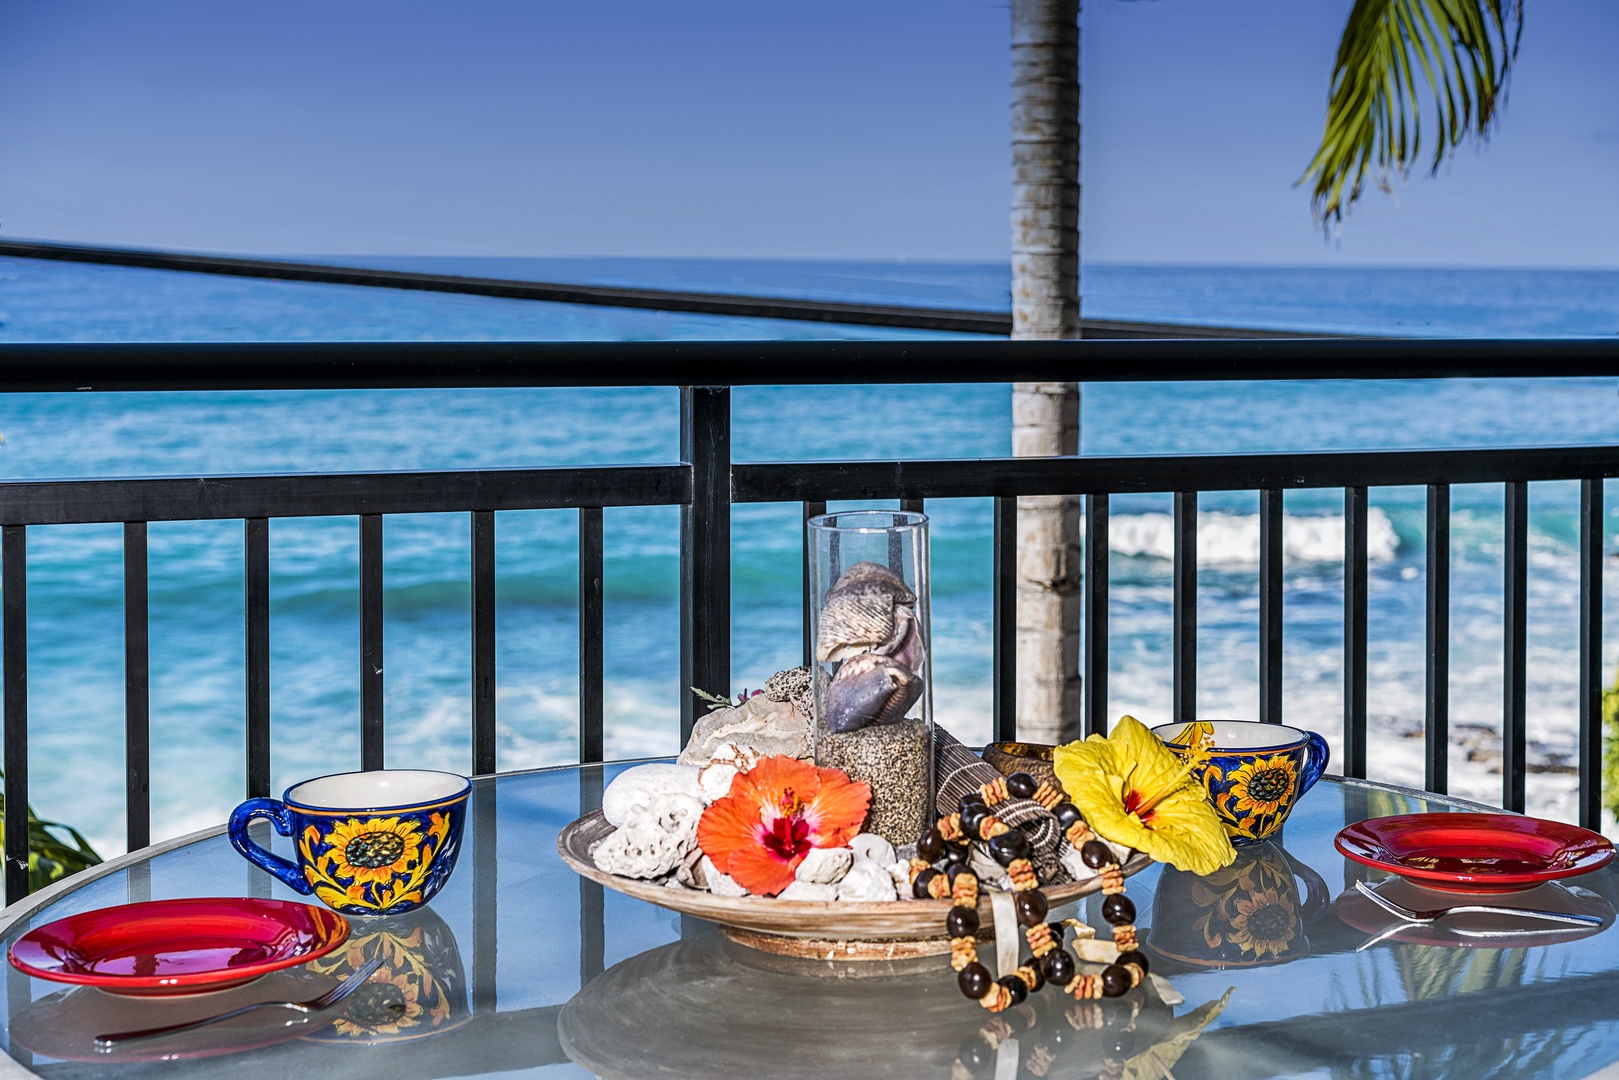 Kailua Kona Vacation Rentals, Kona Alii 201 - Enjoy meals at Sunset!